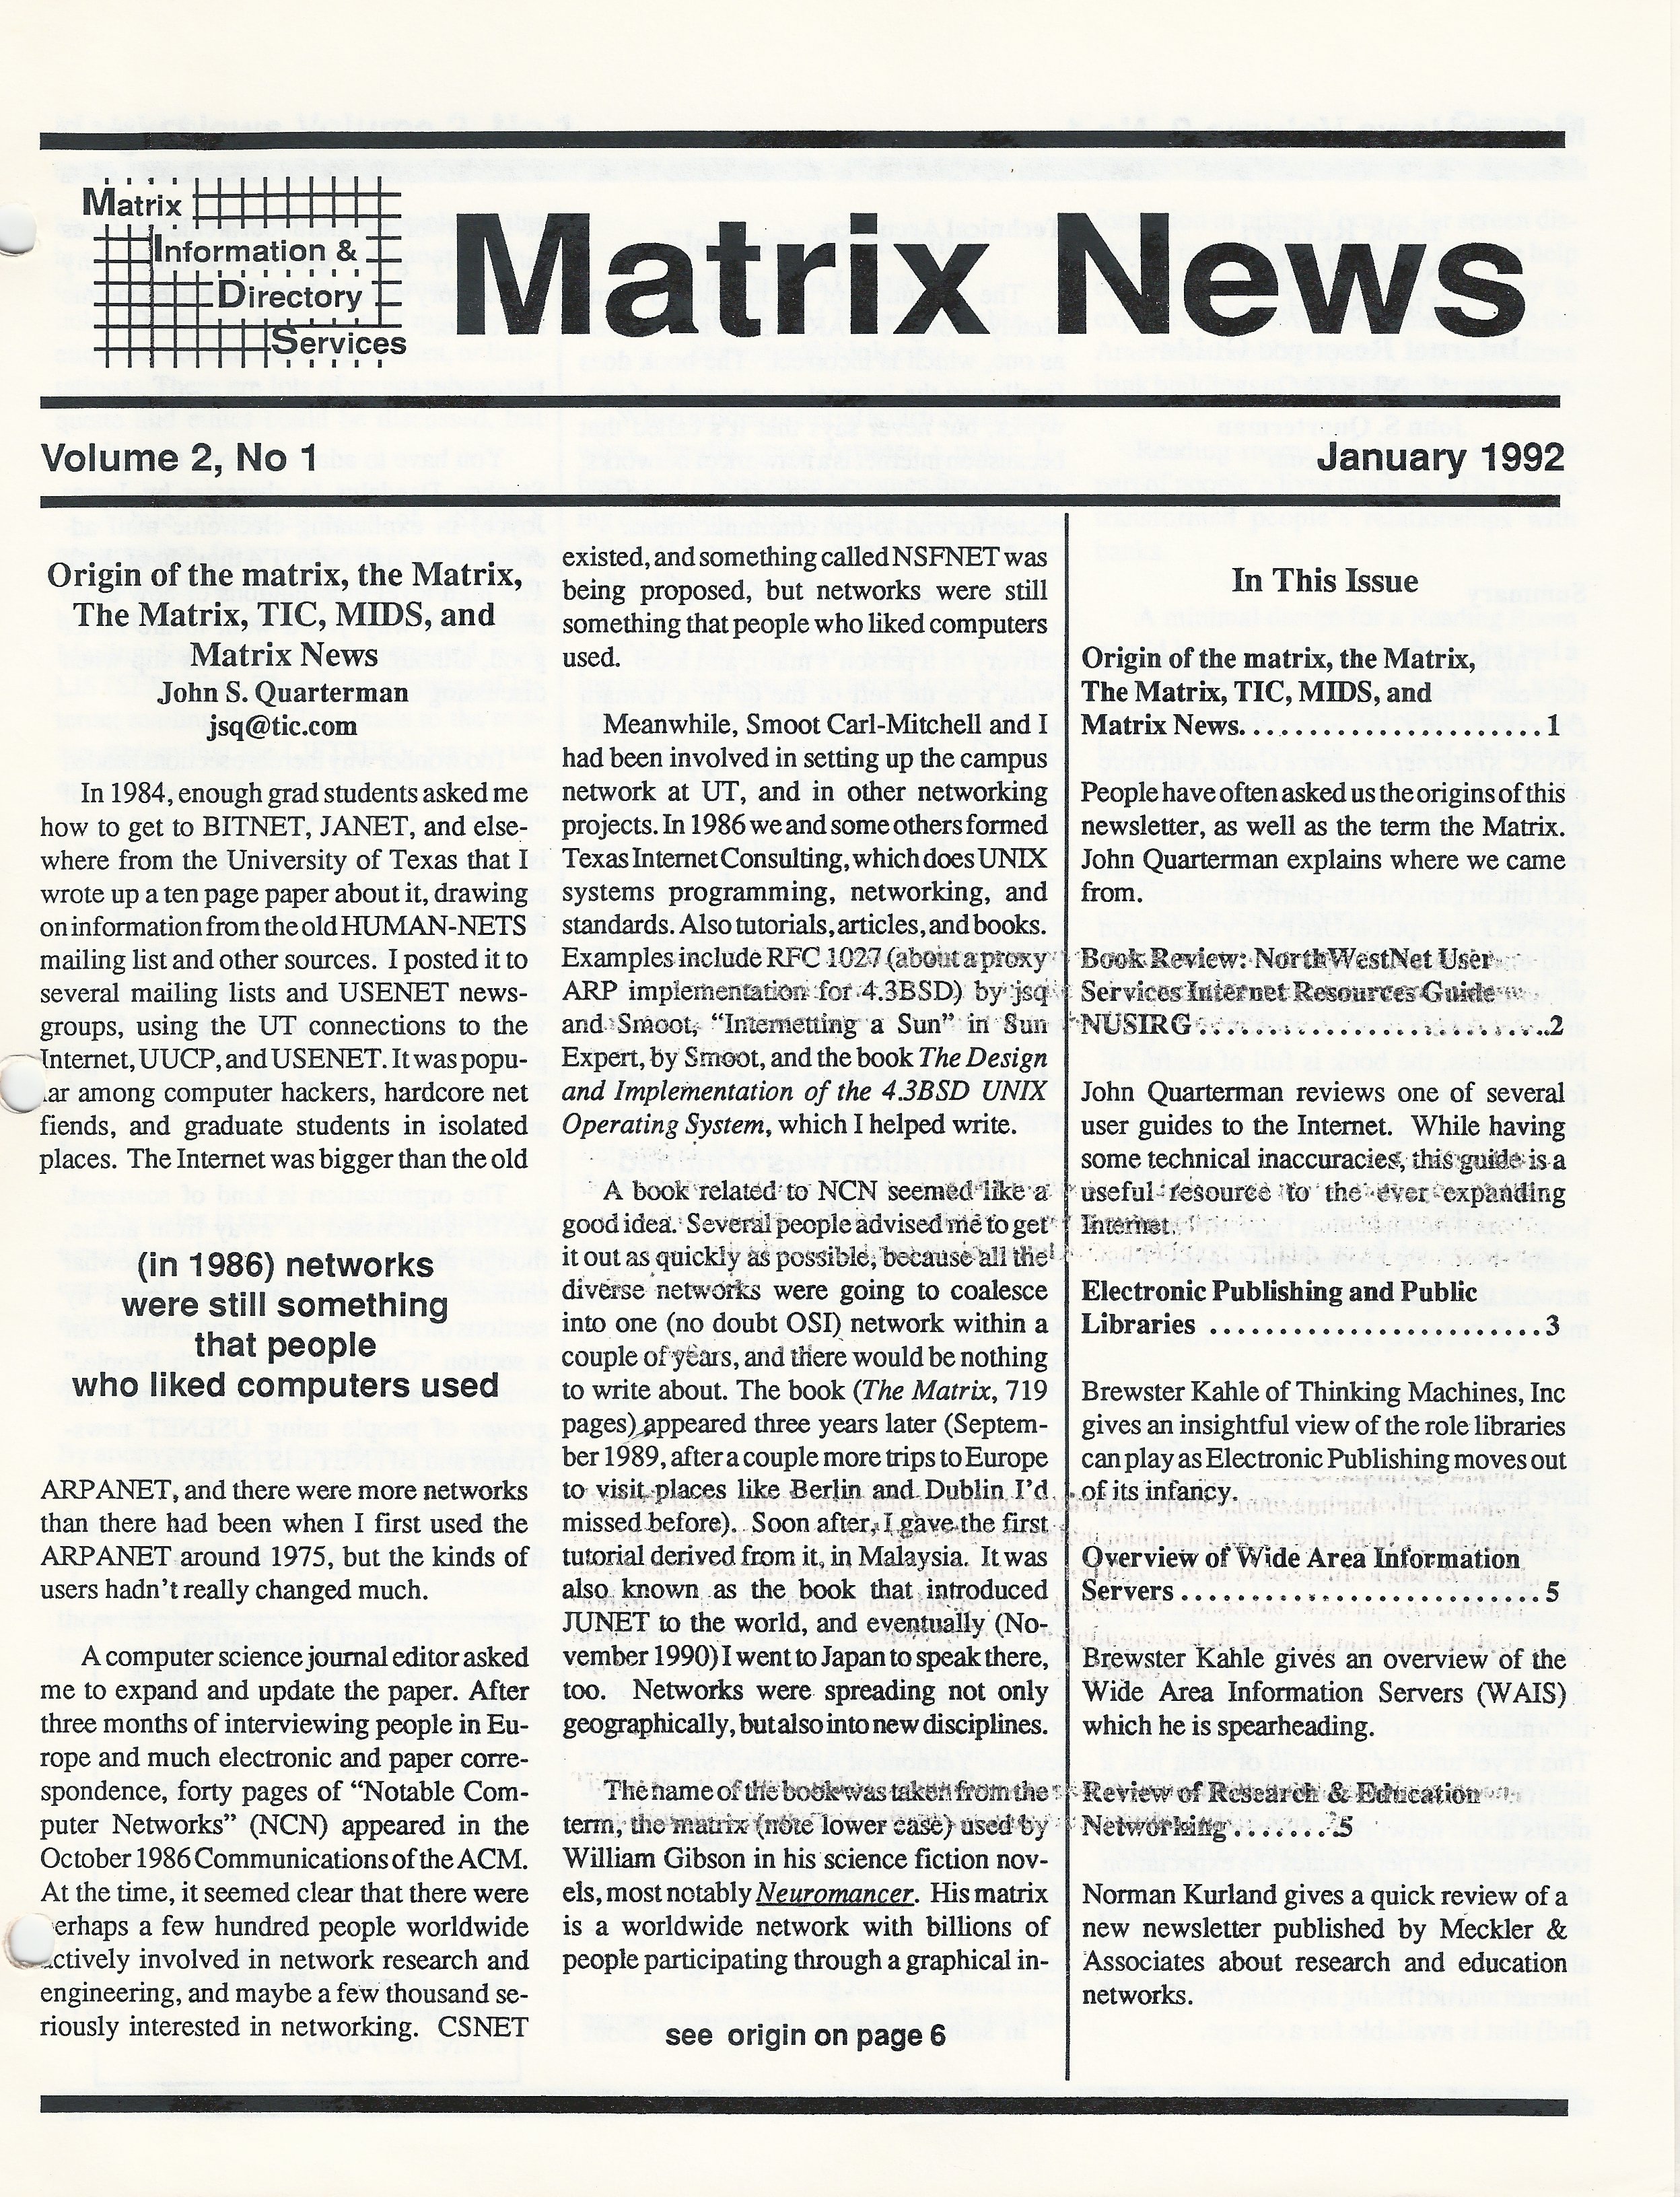 Origin of the matrix, the Matrix, The Matrix, TIC, MIDS, and Matrix News, by John S. Quarterman